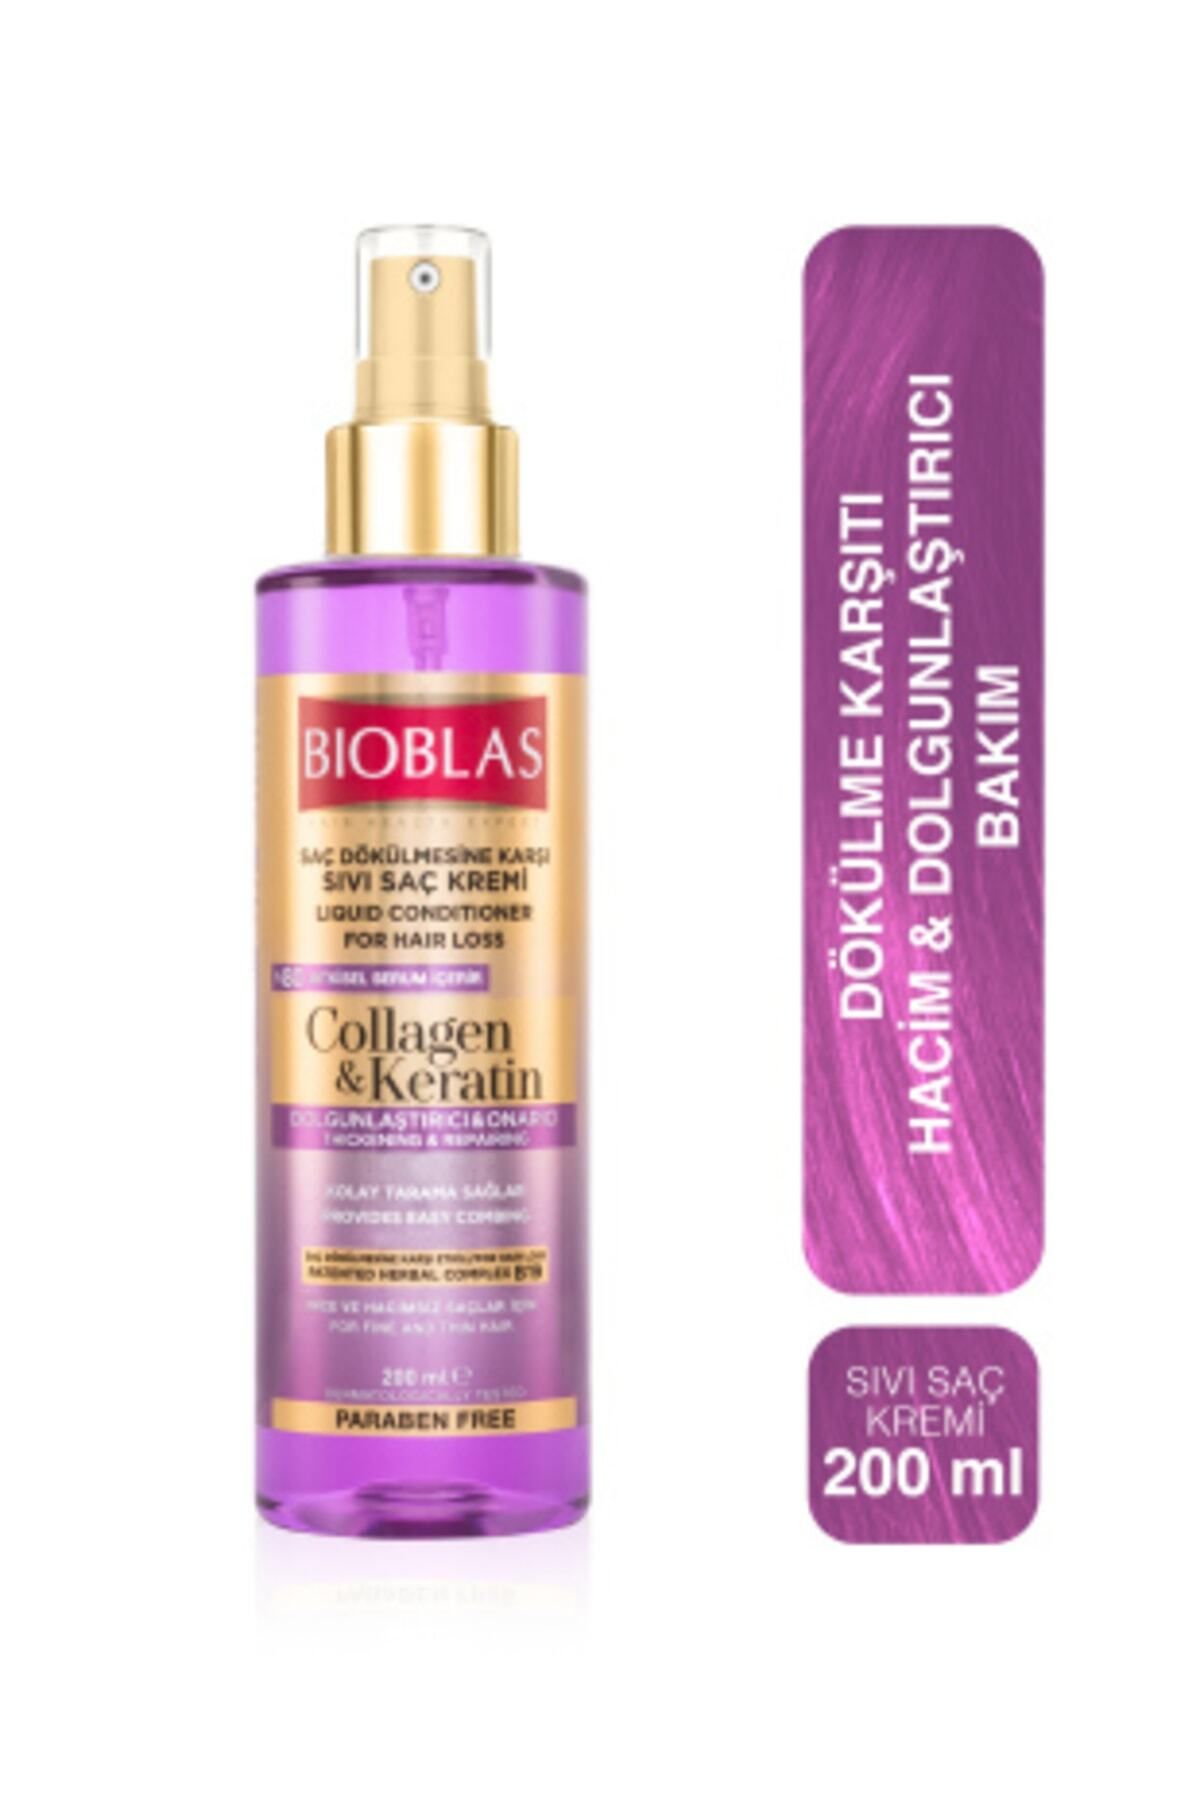 Bioblas Sıvı Saç Kremi Kolajen+keratin 200 ml